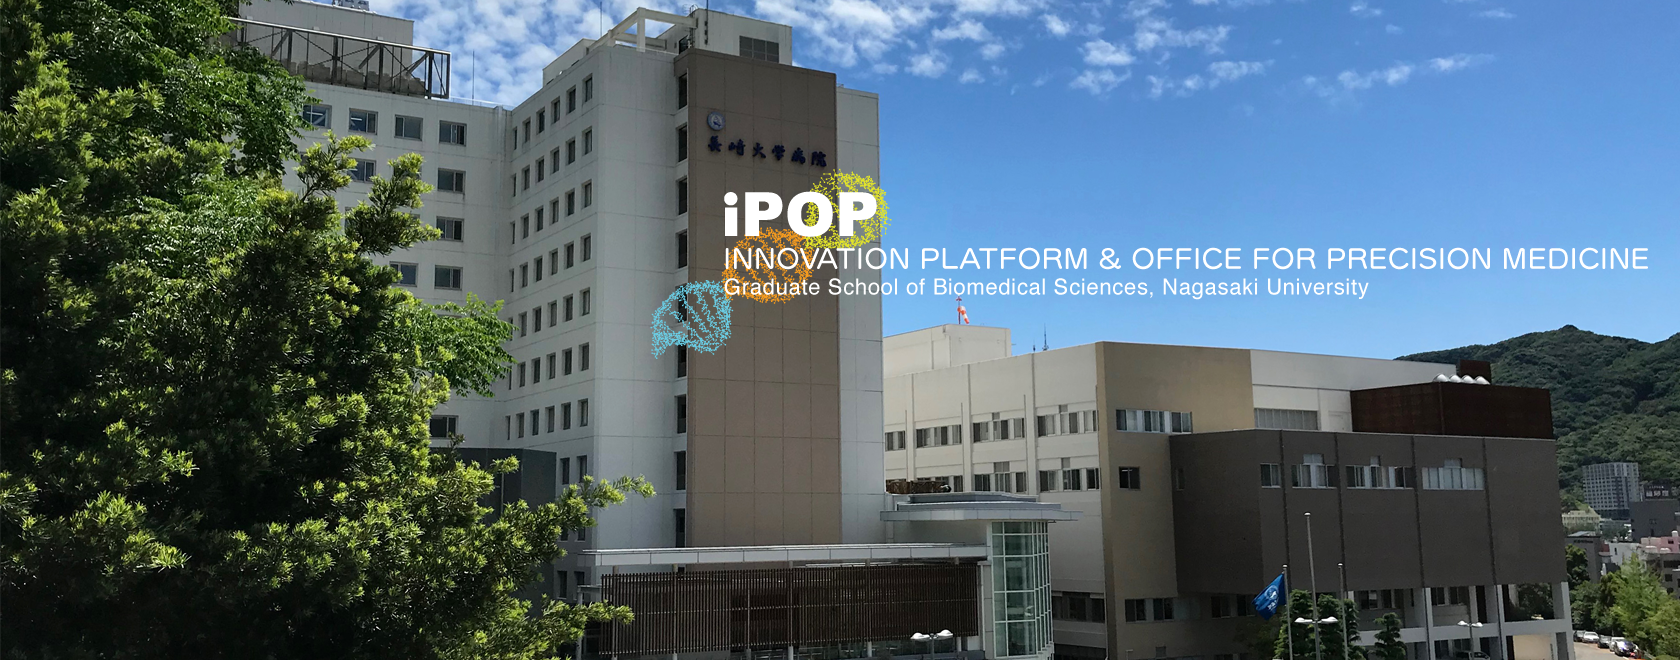 INNOVATION PLATFORM & OFFICE PRECISION MEDICINE(iPOP), Graduate School of Biomedical Sciences, Nagasaki University